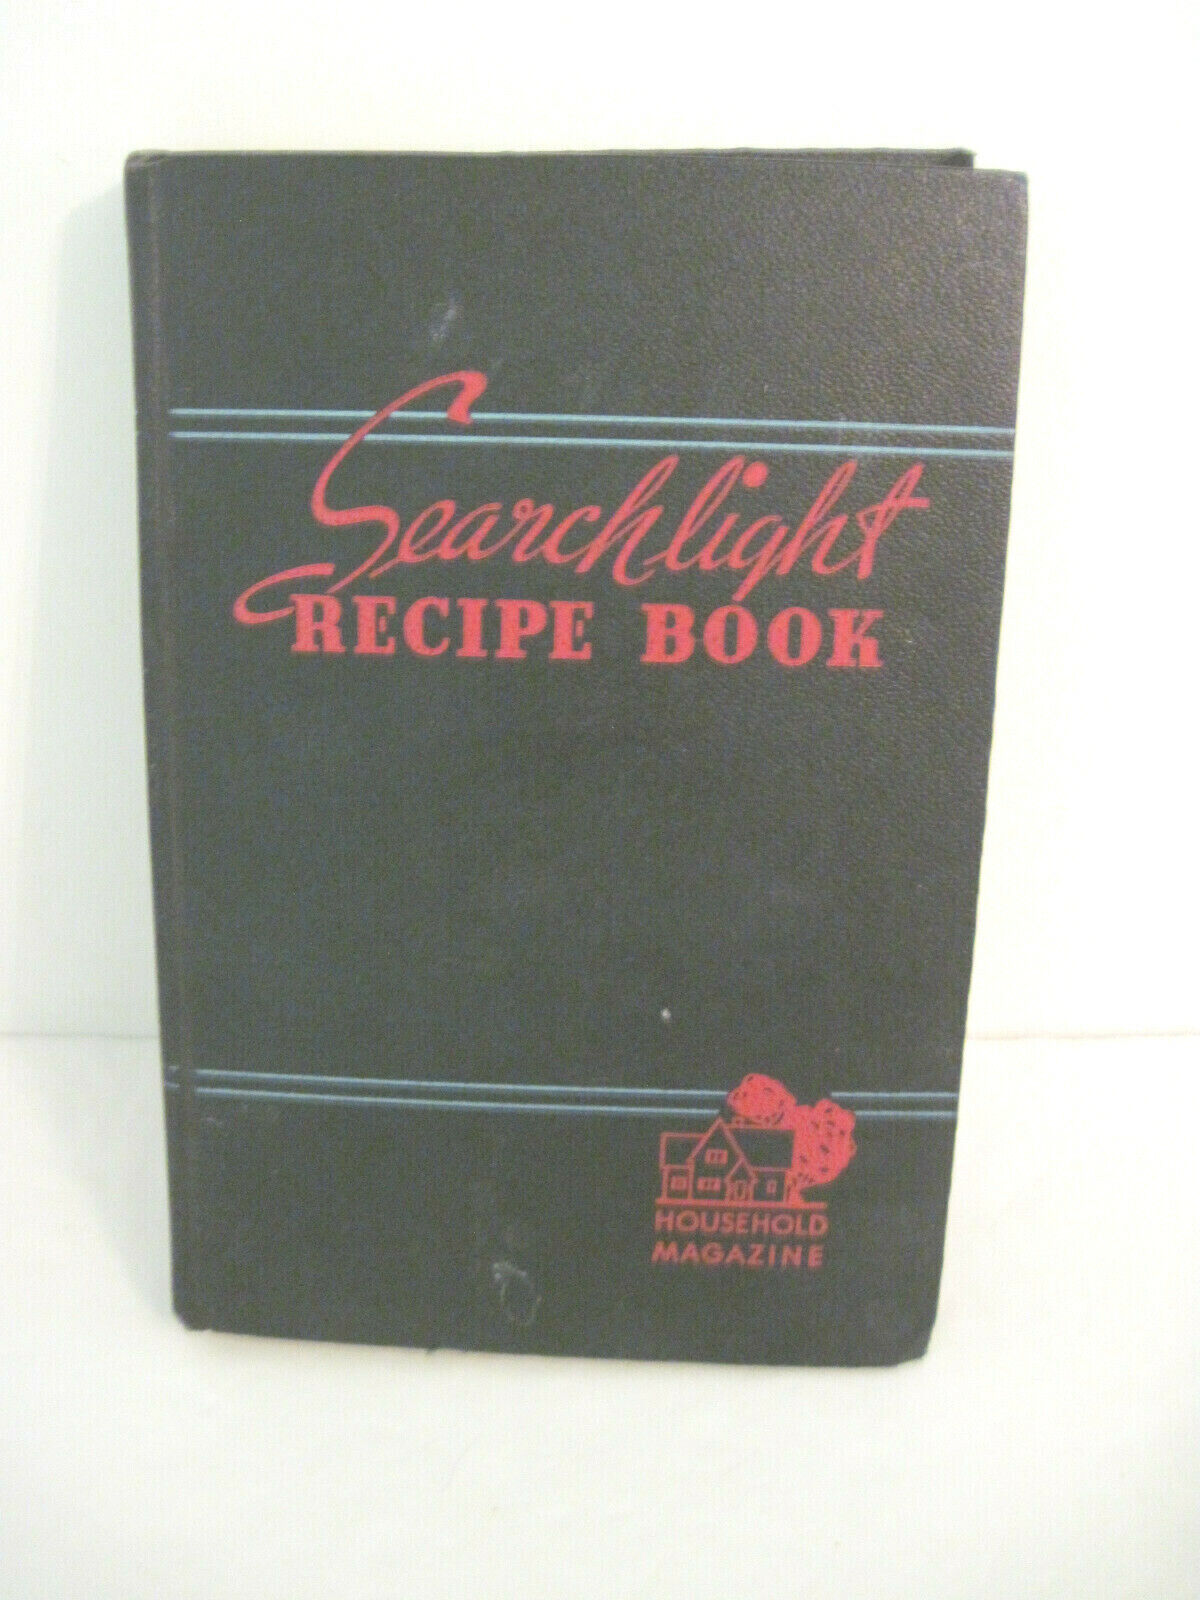 Vintage Searchlight recipe book  Household Magazine, 1947  Good Conditipn